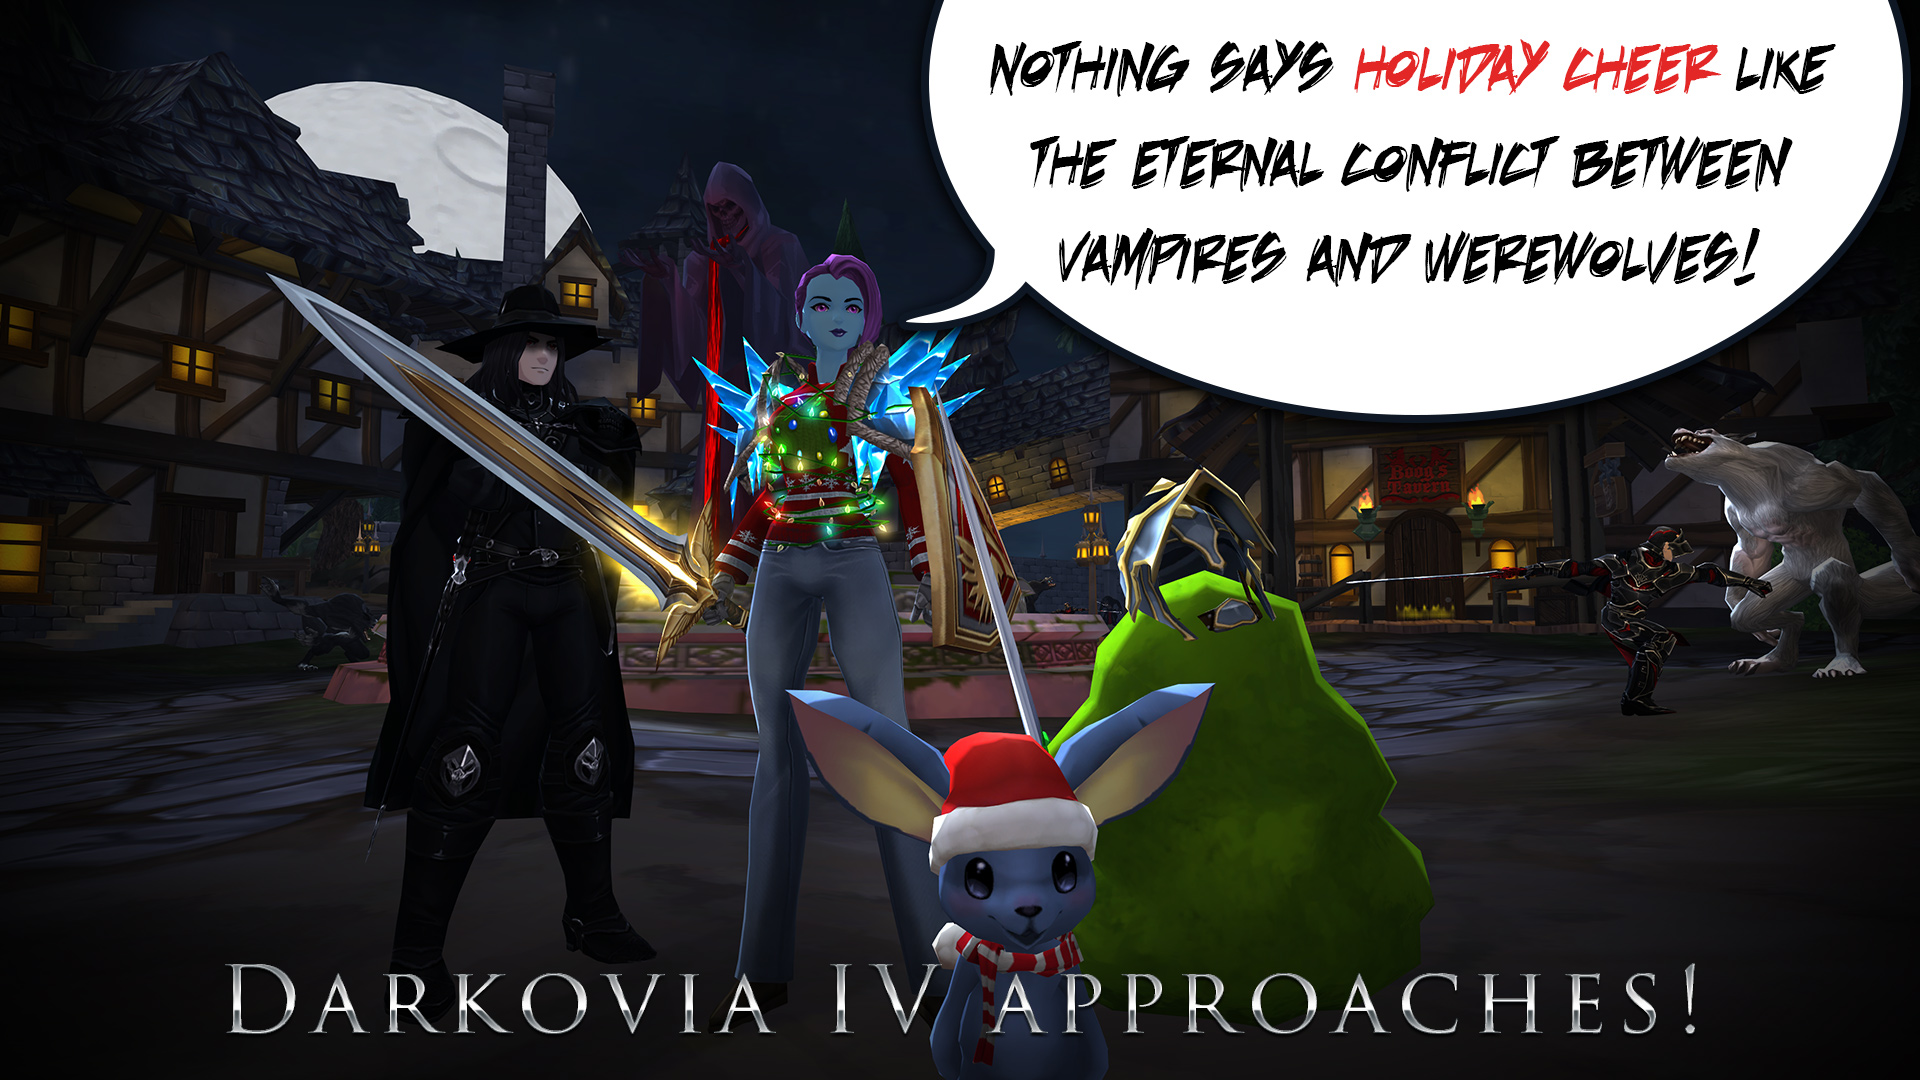 Darkovia IV approaches